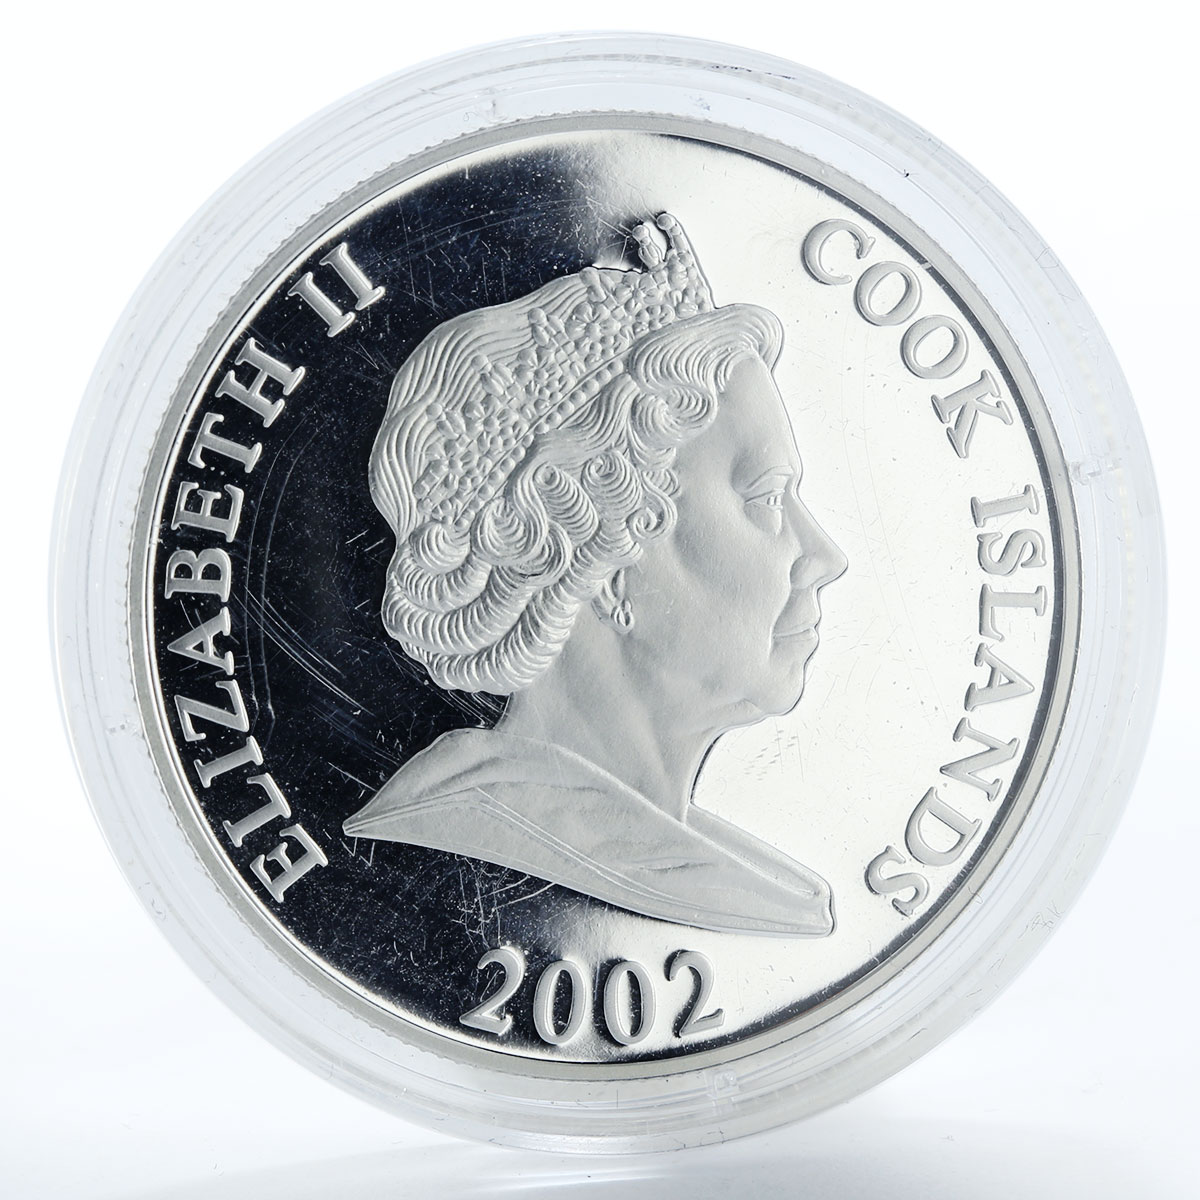 Cook Islands 5 dollars Jaguar silver coin 2002